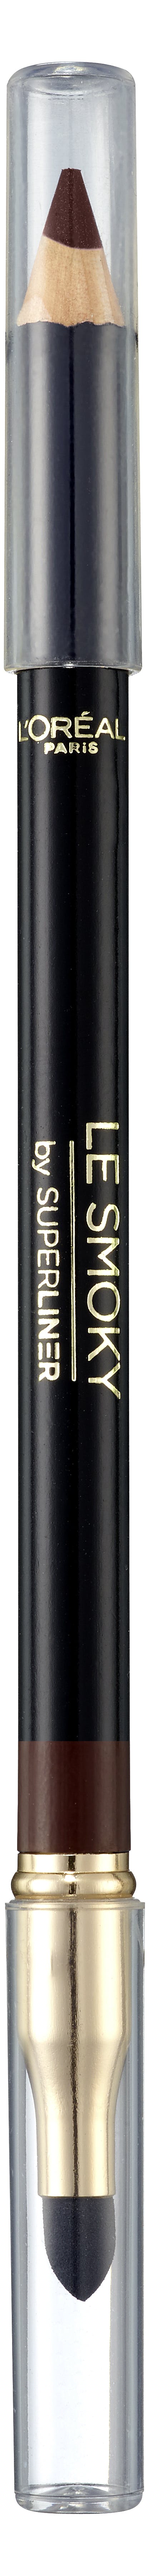 Super Liner Le Smoky_logo